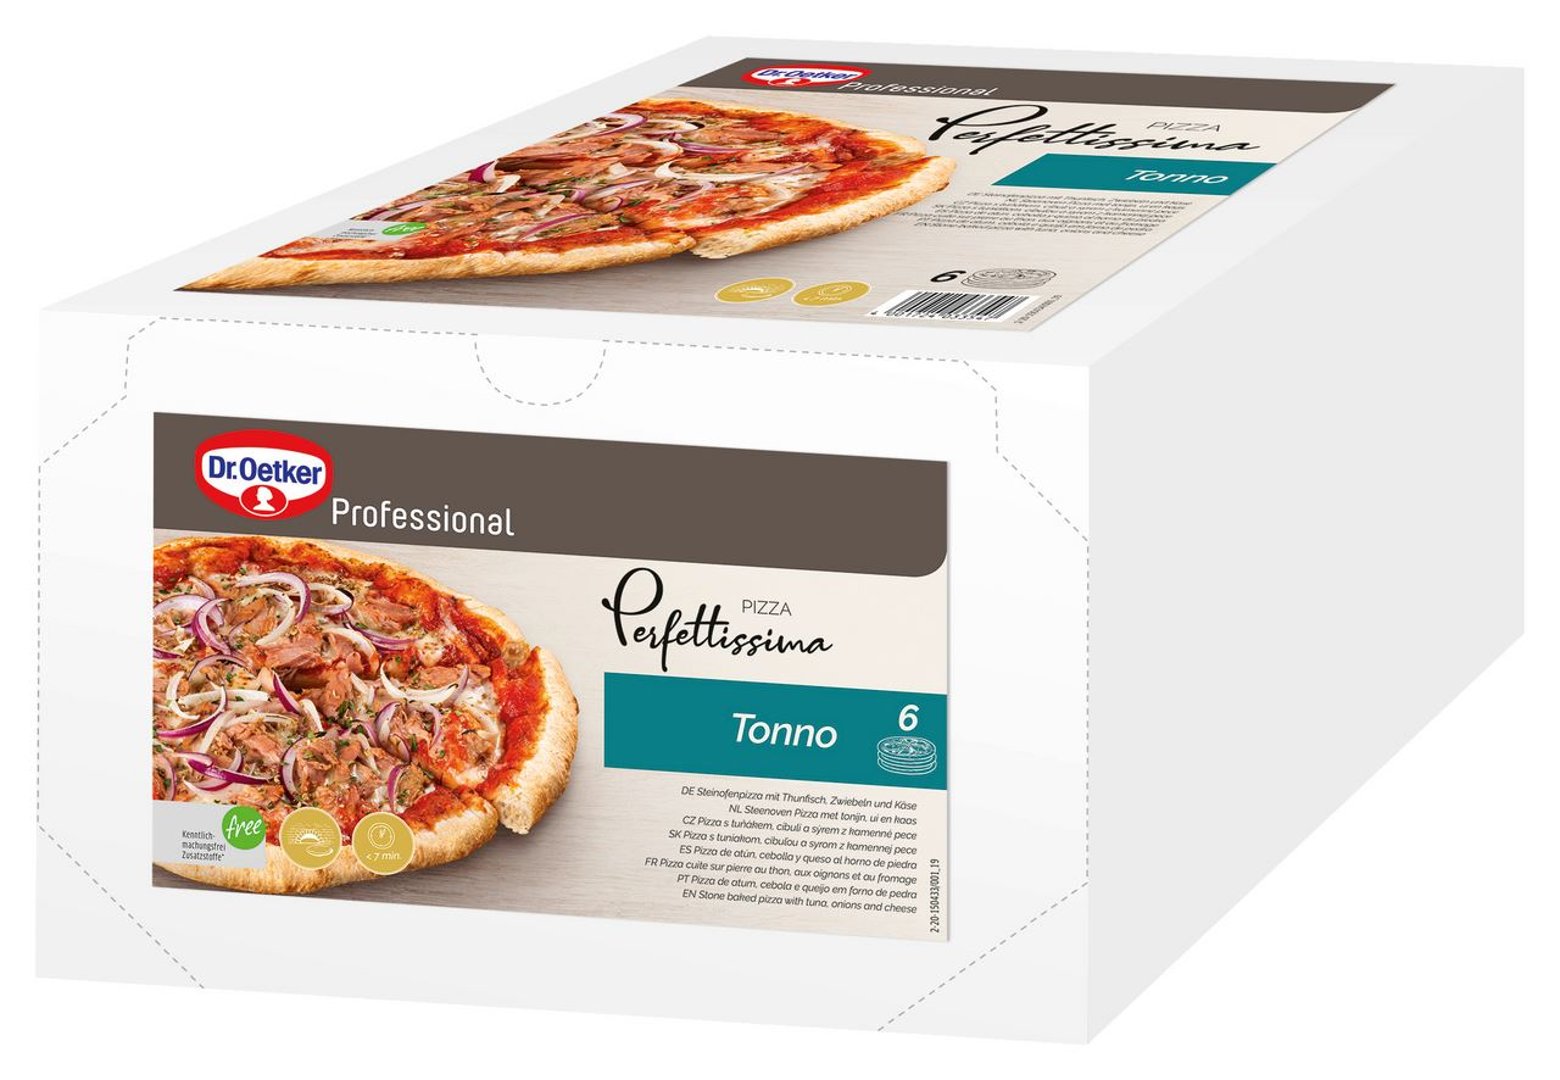 Dr. Oetker Professional - Pizza Perfettissima Tonno, tiefgefroren, 6 Stück à 410 g - 2,46 kg Karton